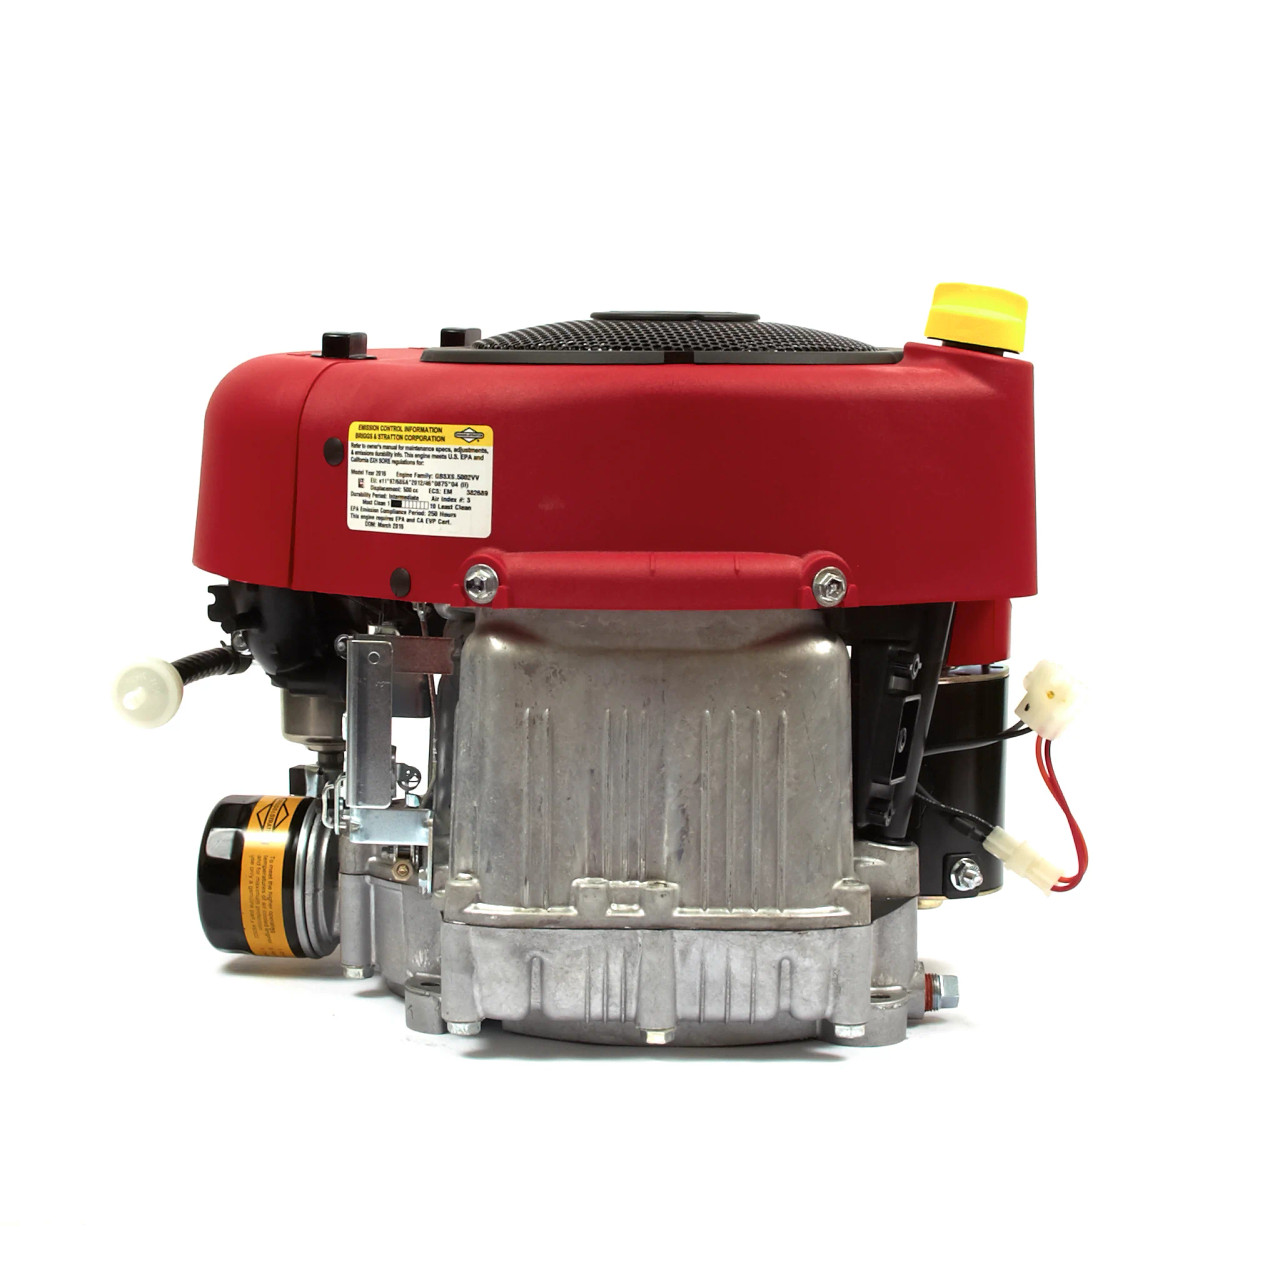 Intek Series 17.5 HP 500cc Vertical Shaft Engine 31R977-0029-G1